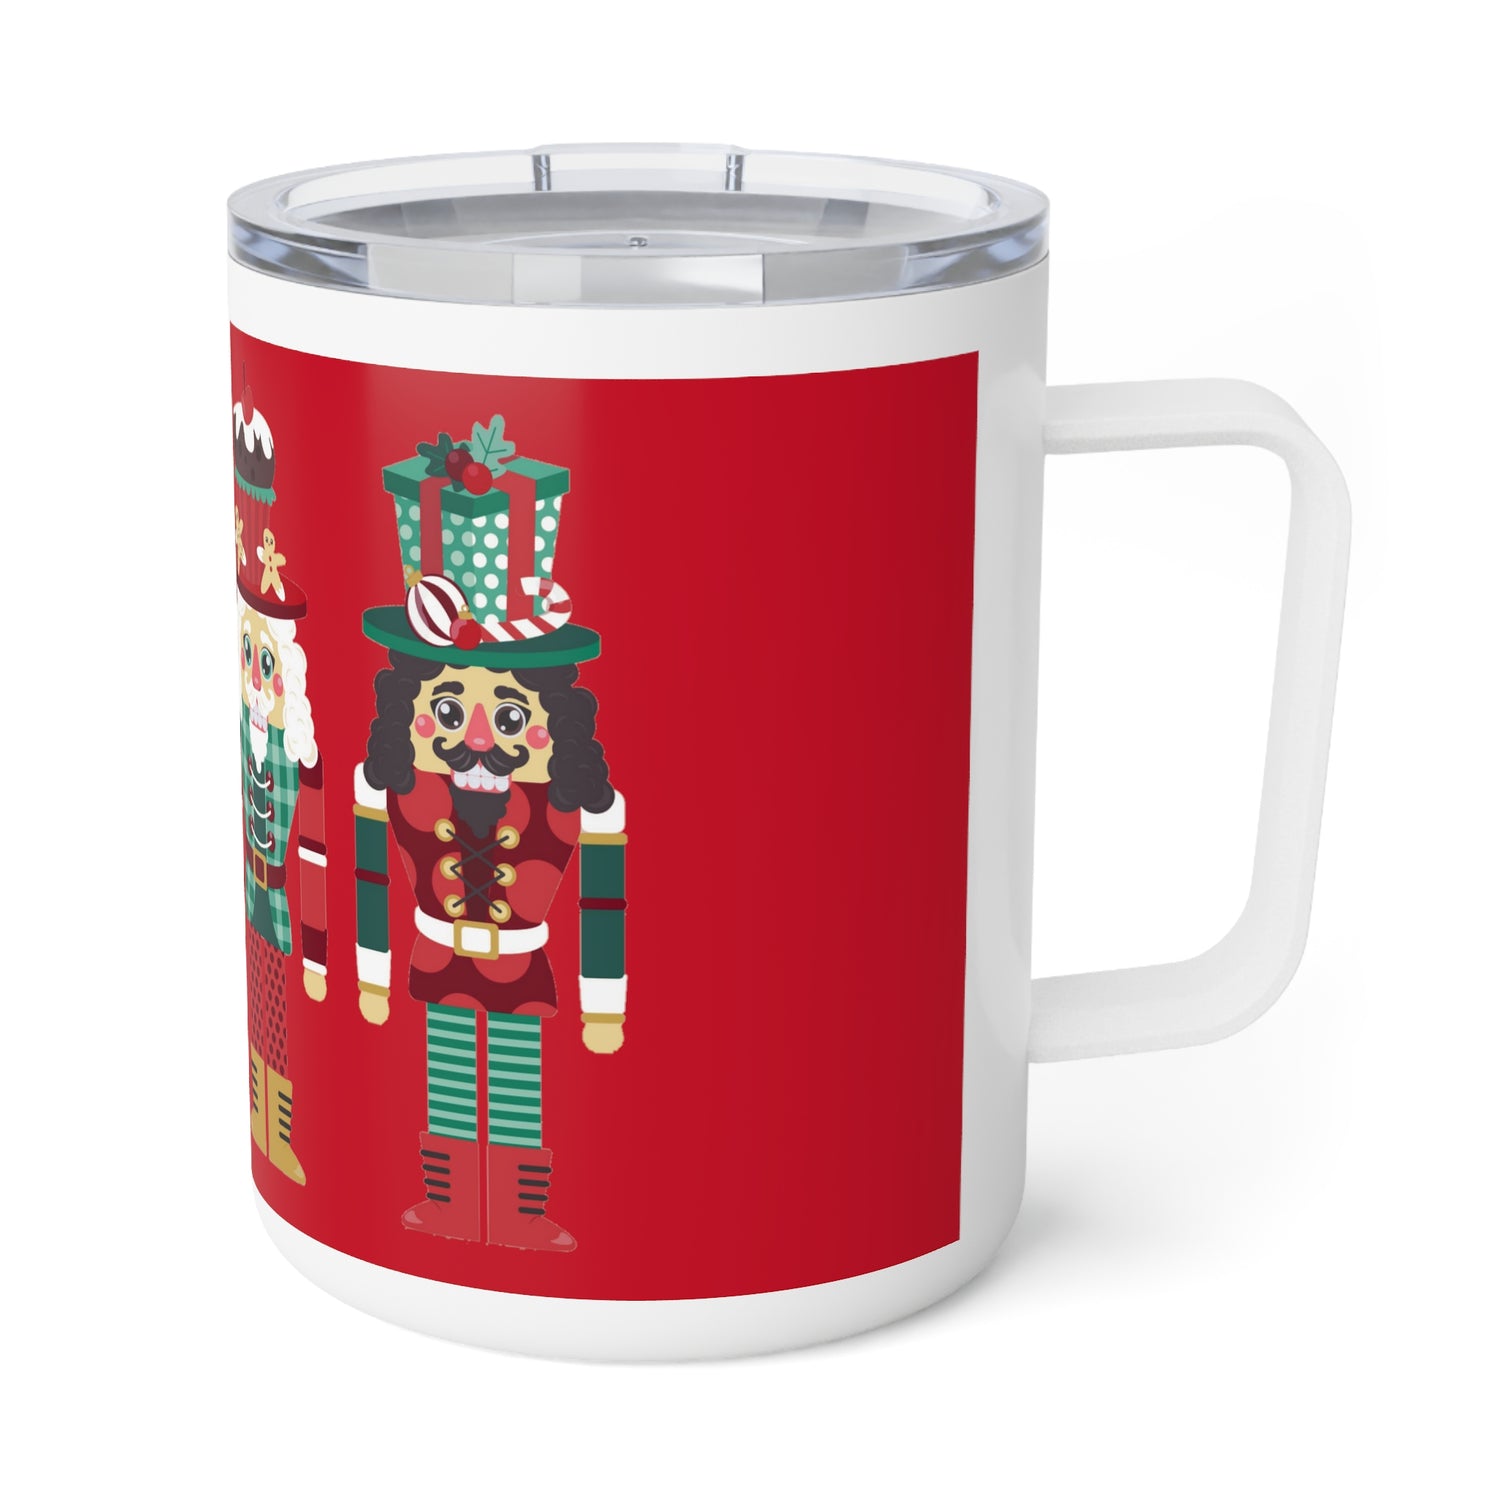 Insulated Coffee Mug, 10oz Christmas Nutcrackers Home-clothes-jewelry